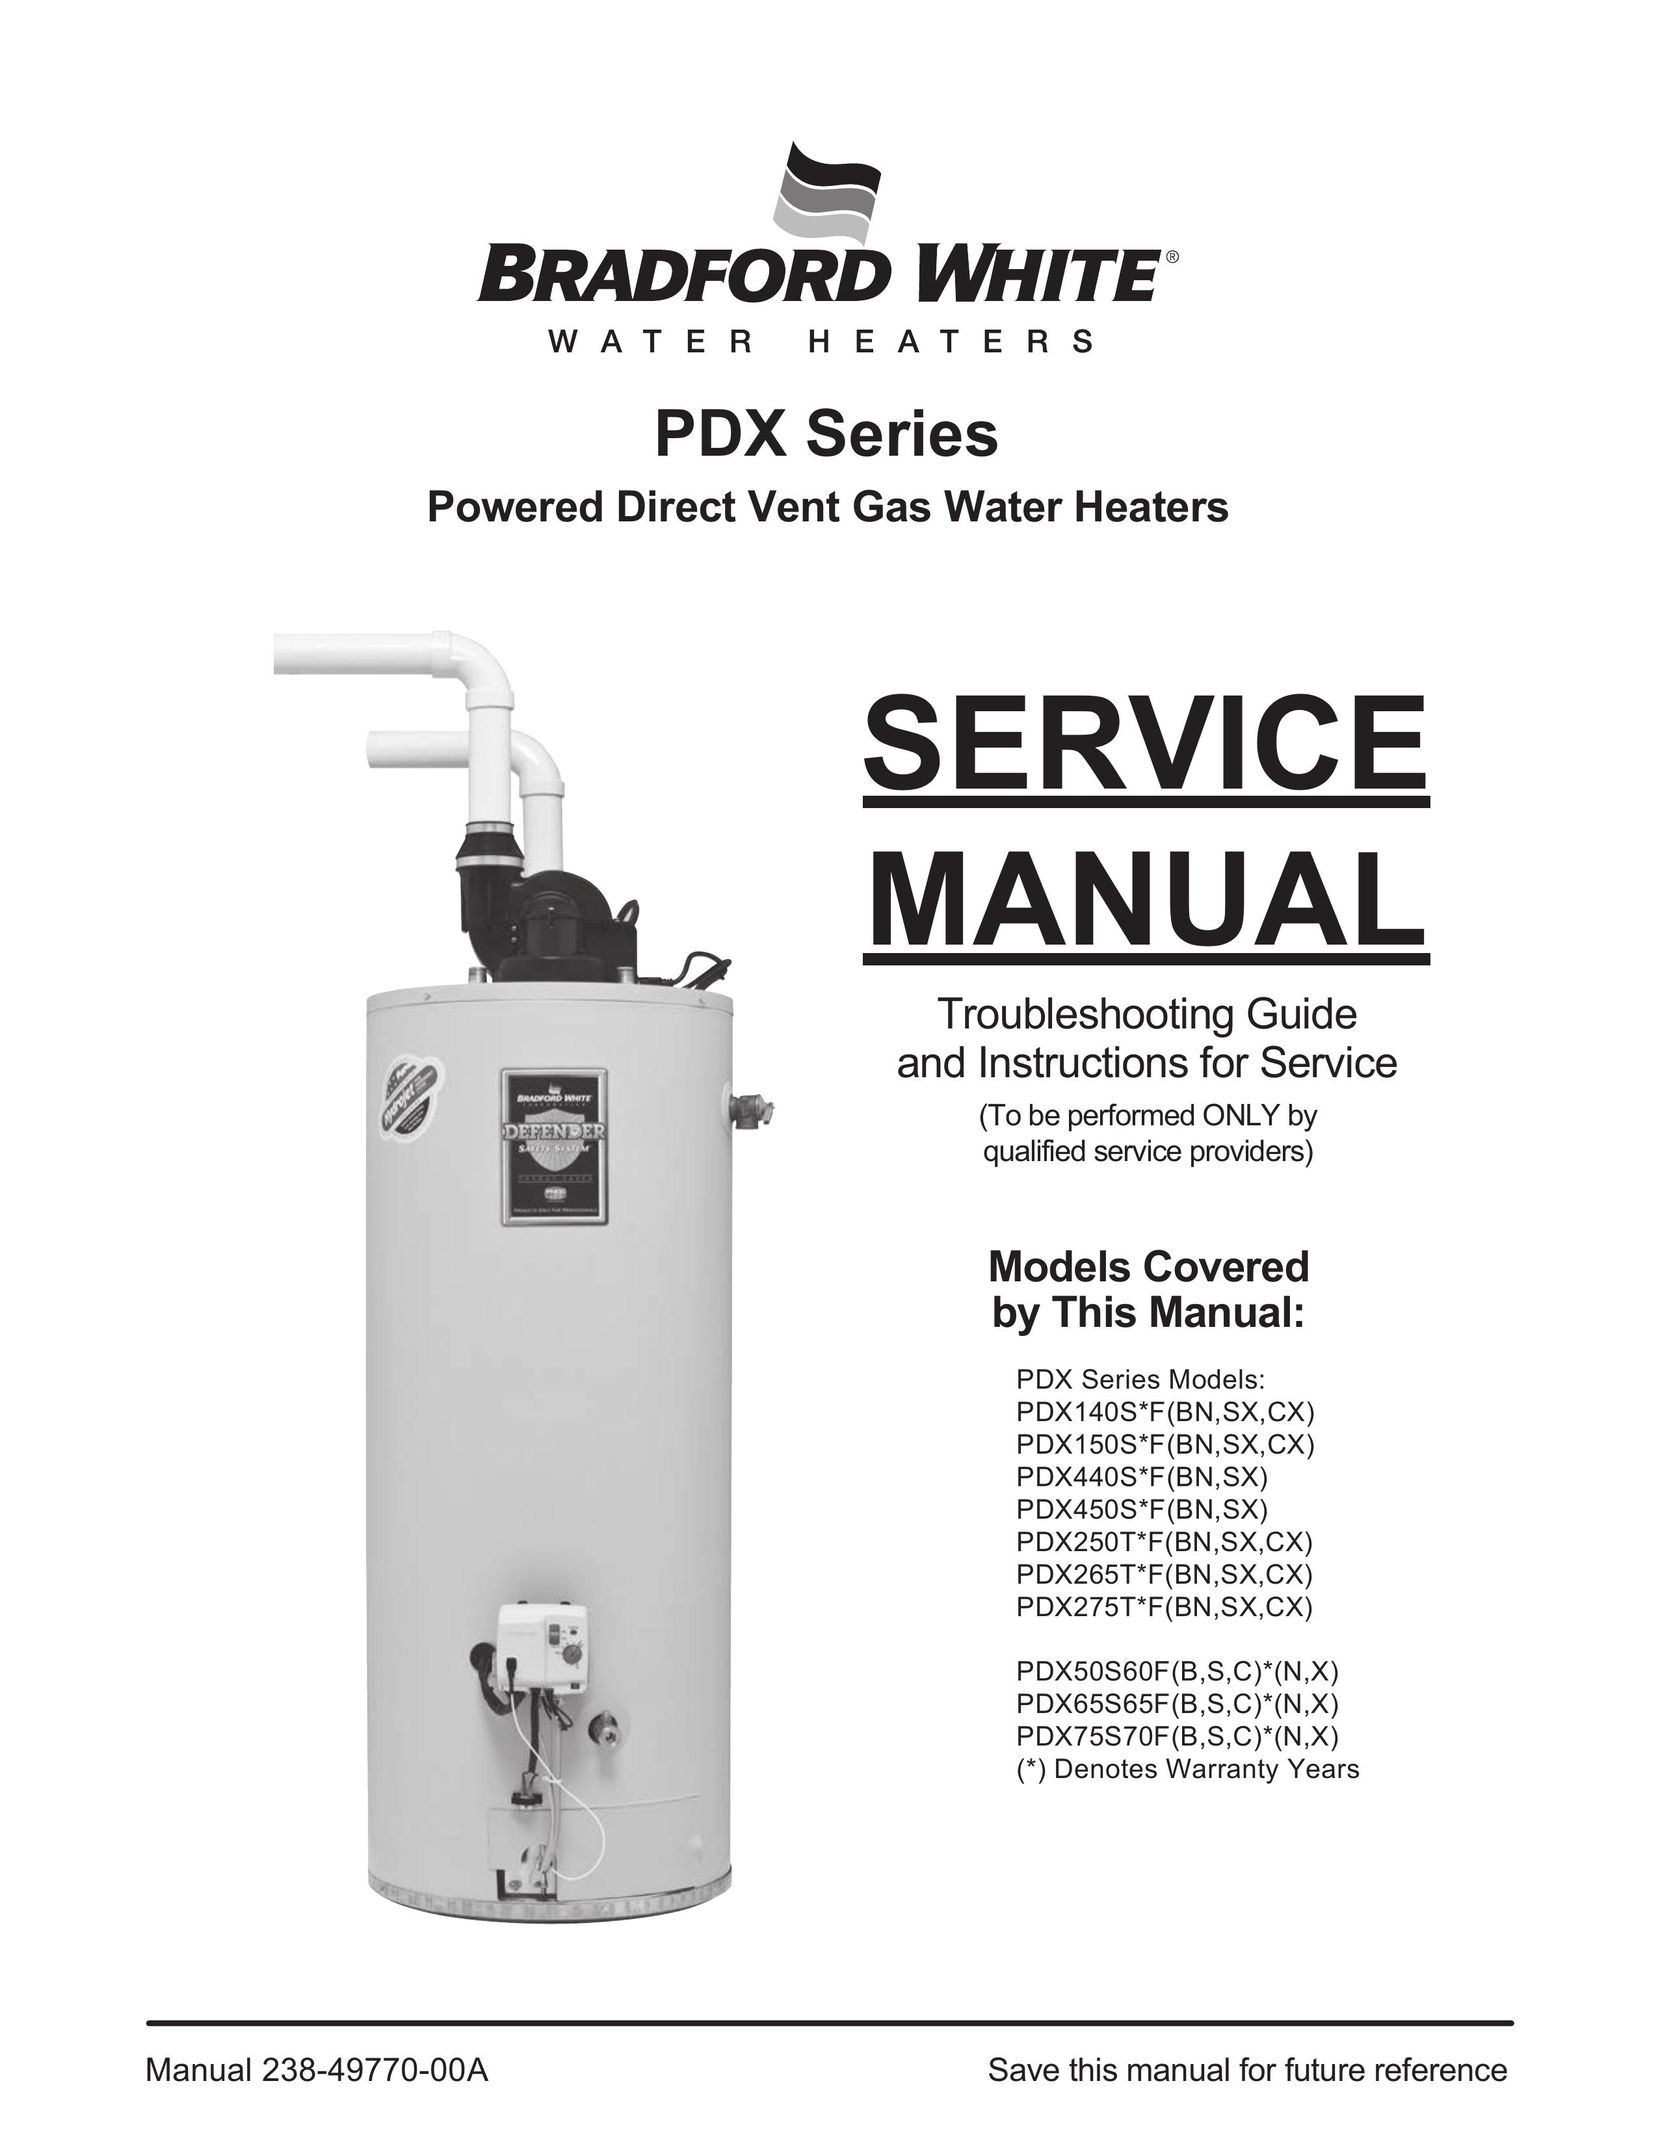 Honeywell PDX250T*F(BN,SX,CX) Water Heater User Manual